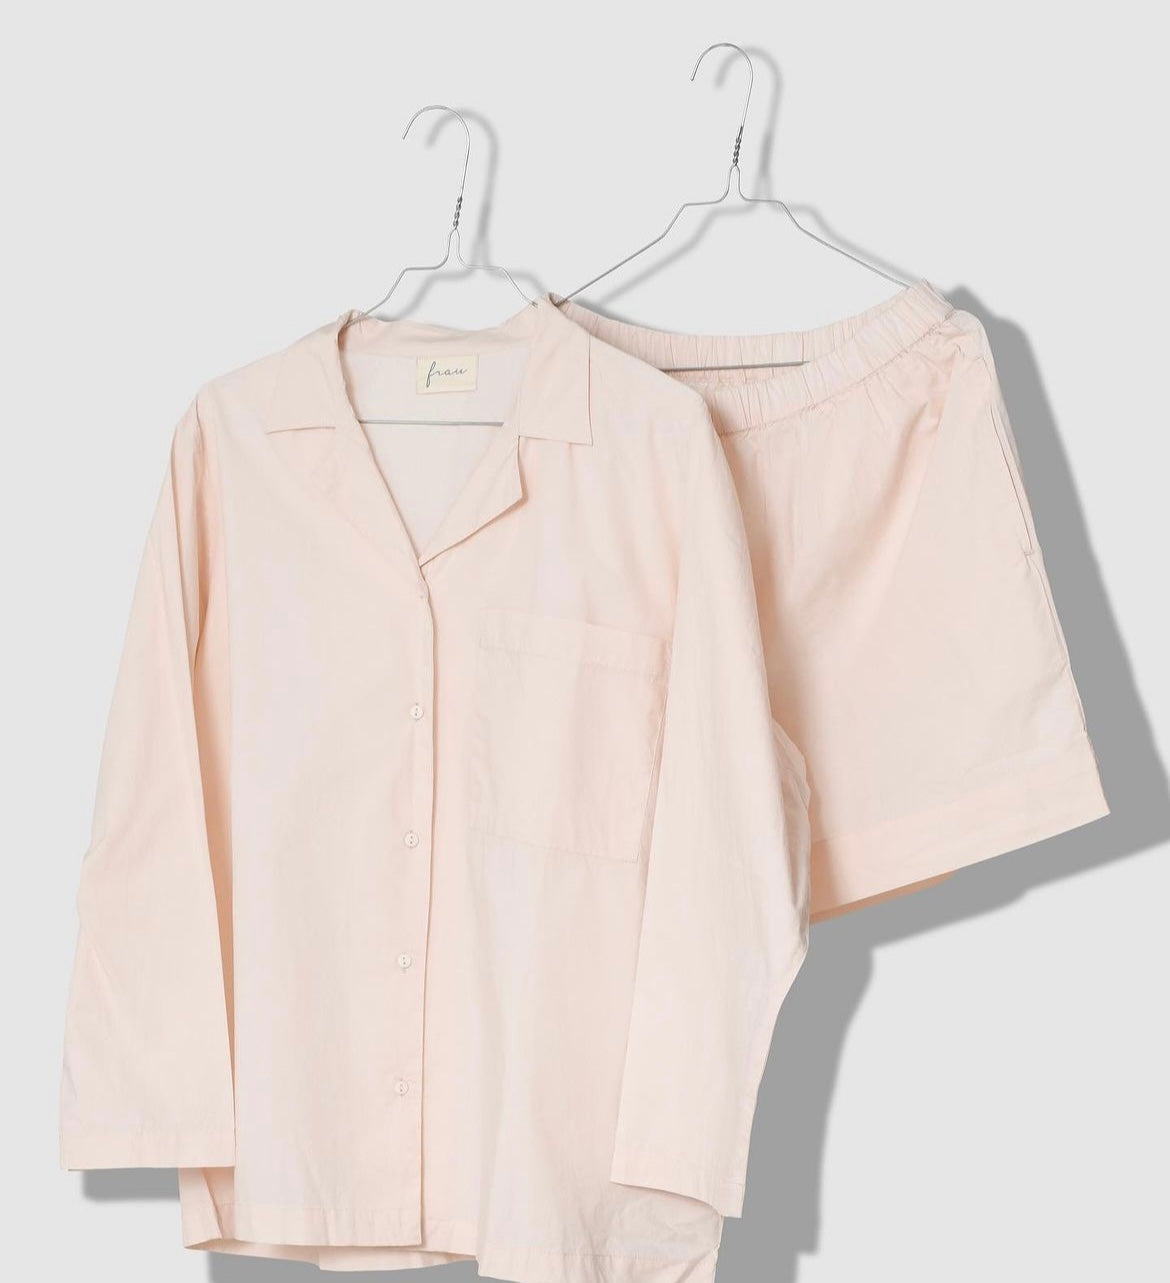 Frau Seattle skjorte - One Size - Mange Farver